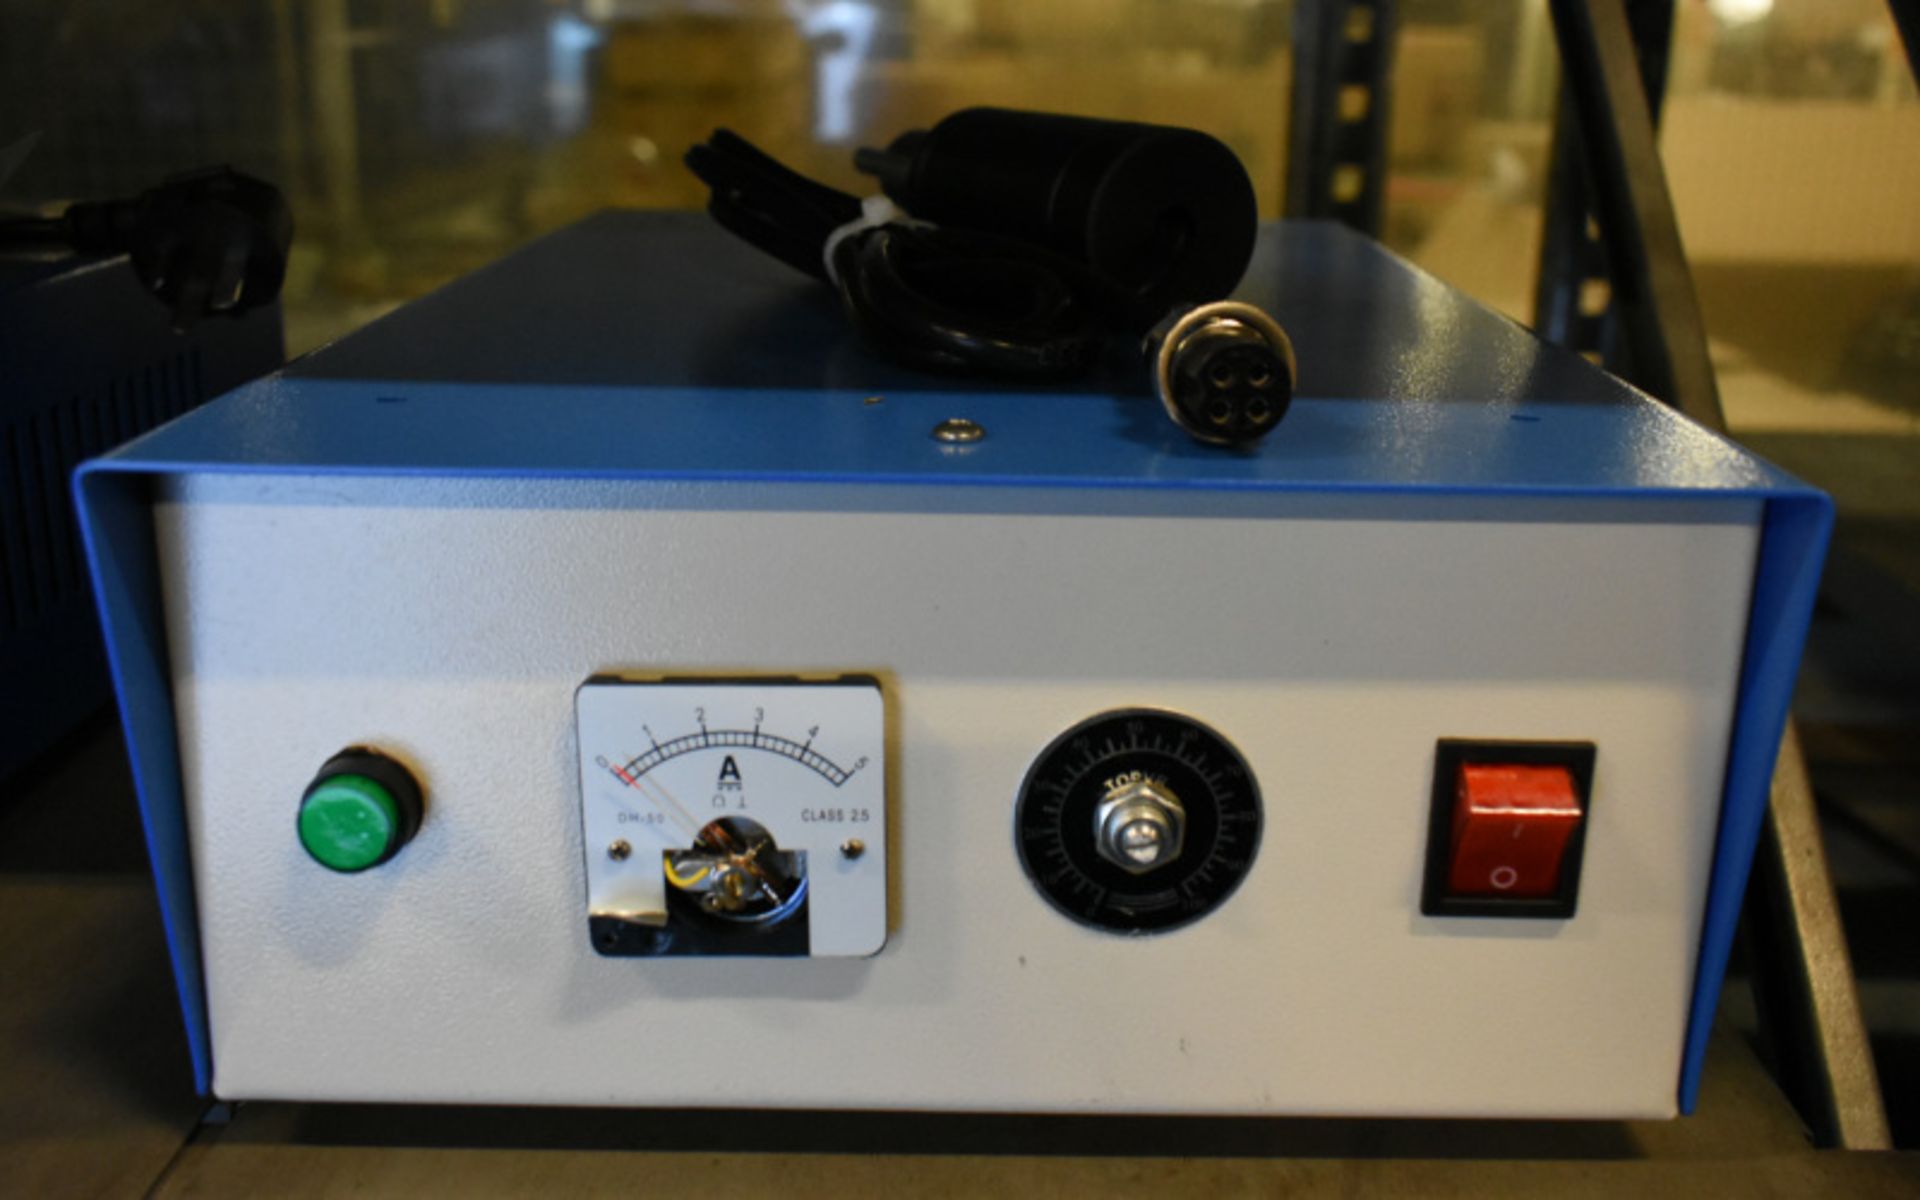 DCR MAM DG-310 Mask Attaching Electrical Unit 200-250V - 50Mhz